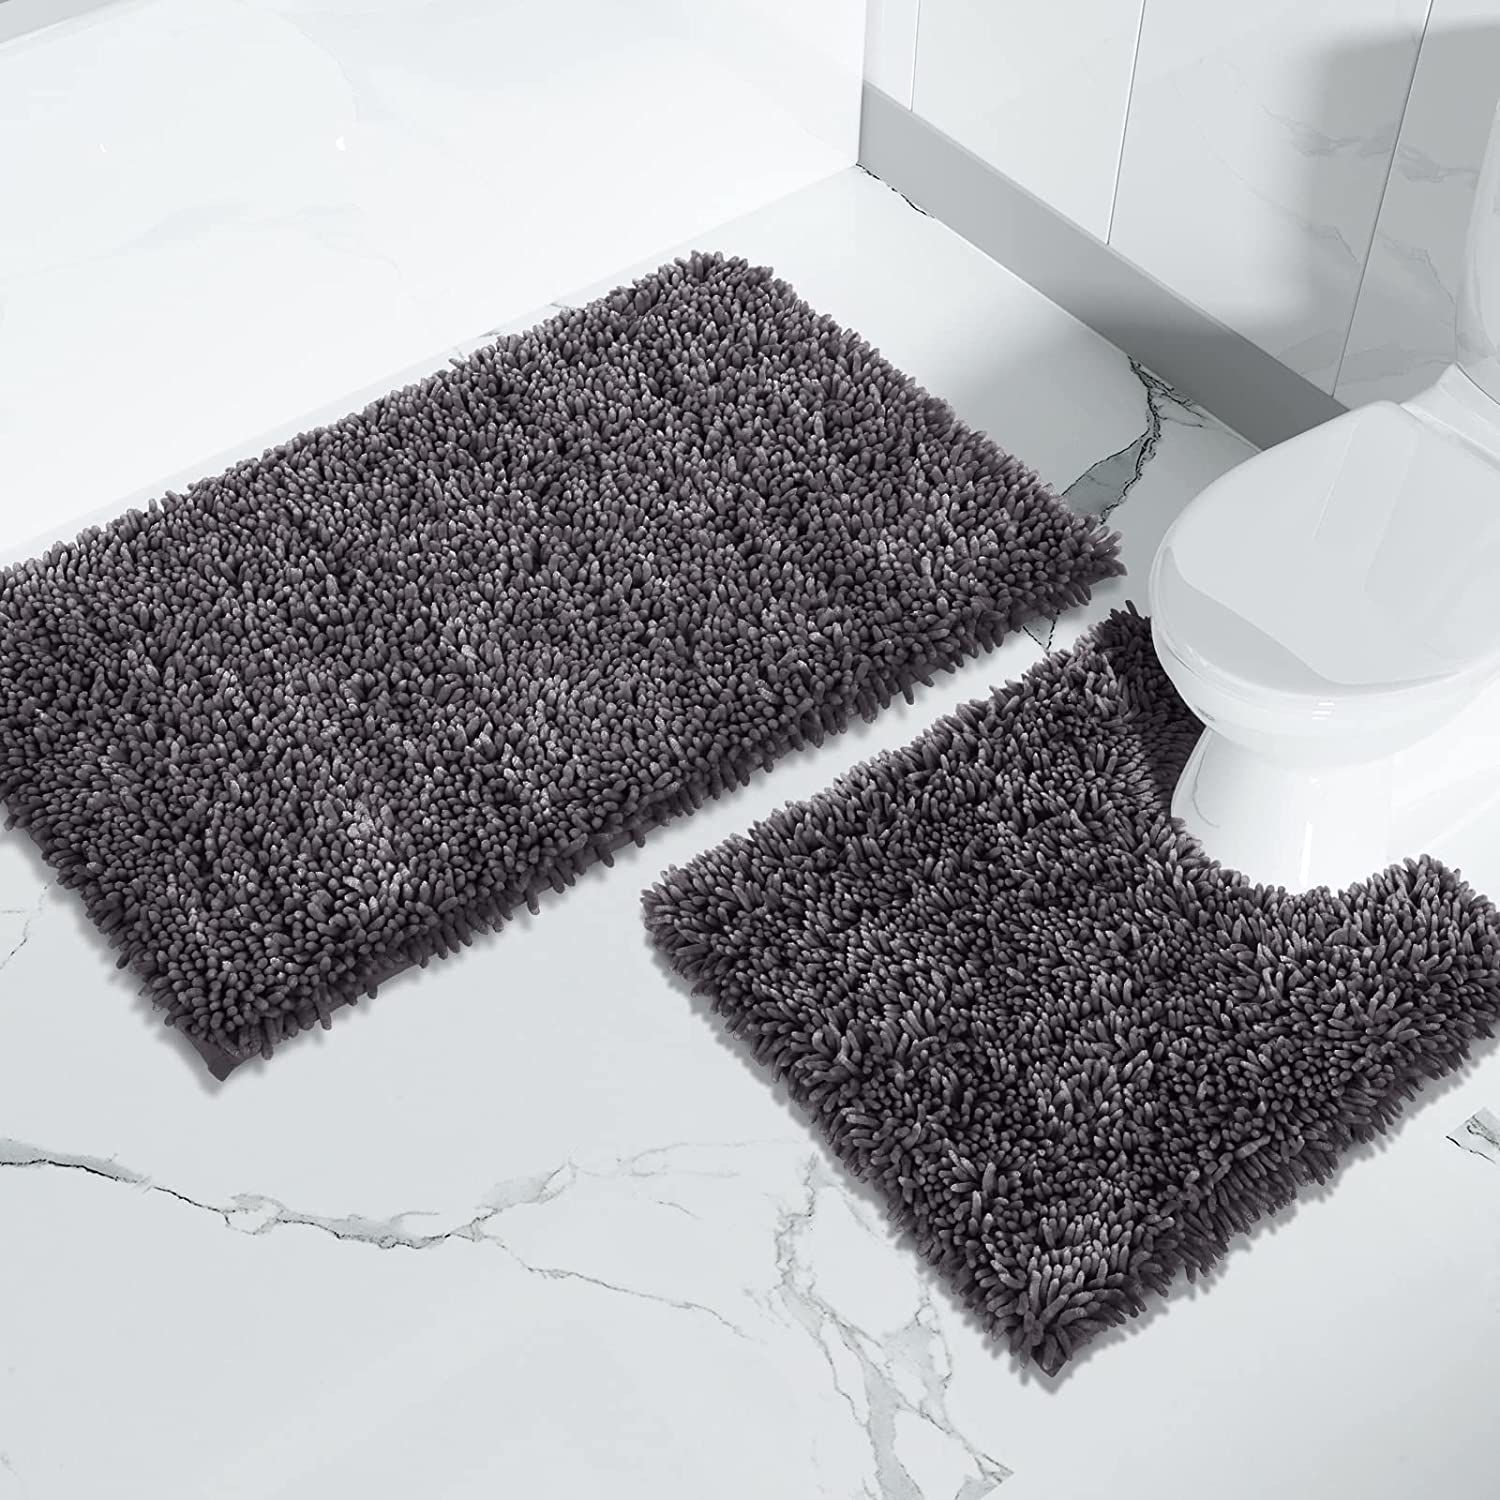 Yimobra Bathroom Rugs Sets 2 Piece, Luxury Shaggy Extra Thick